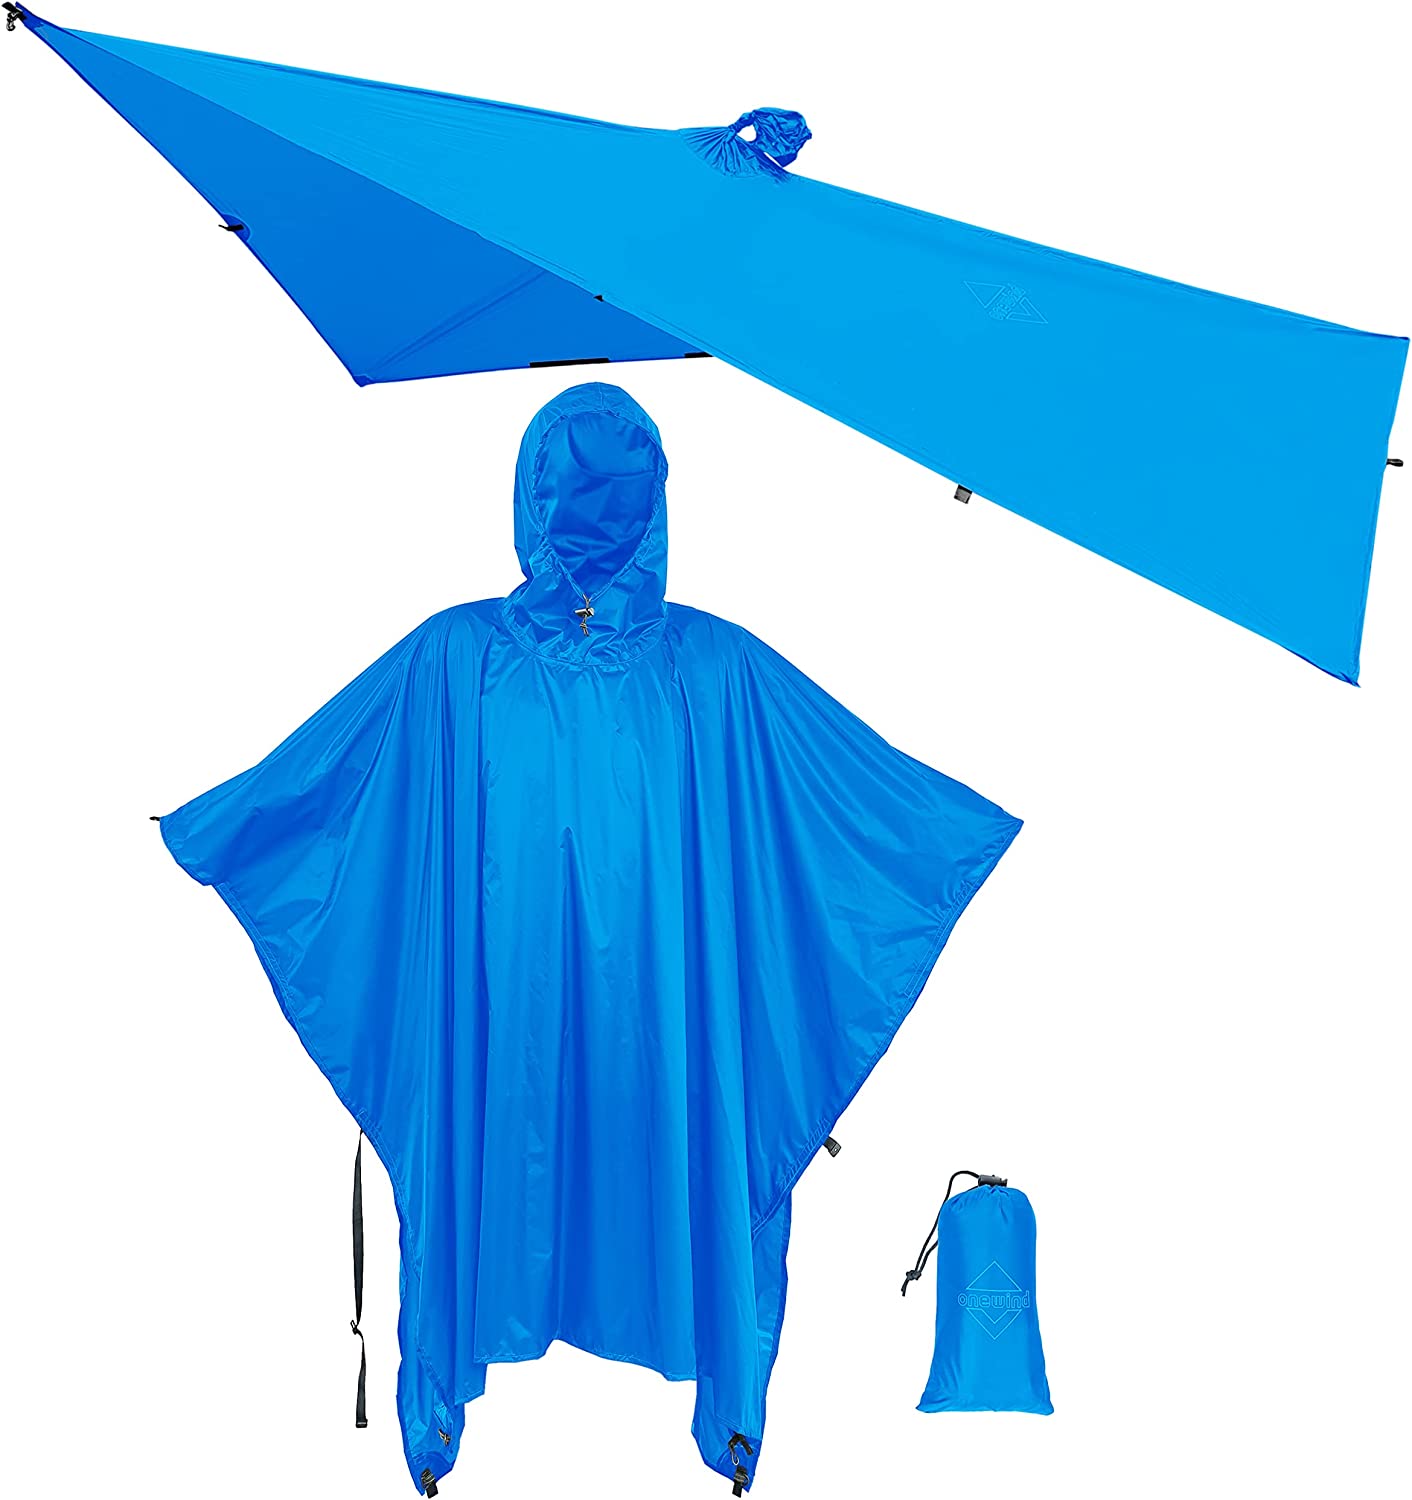 onewind Ultralight Silnylon Poncho Tarp Shelter Rain Jacket with Hood